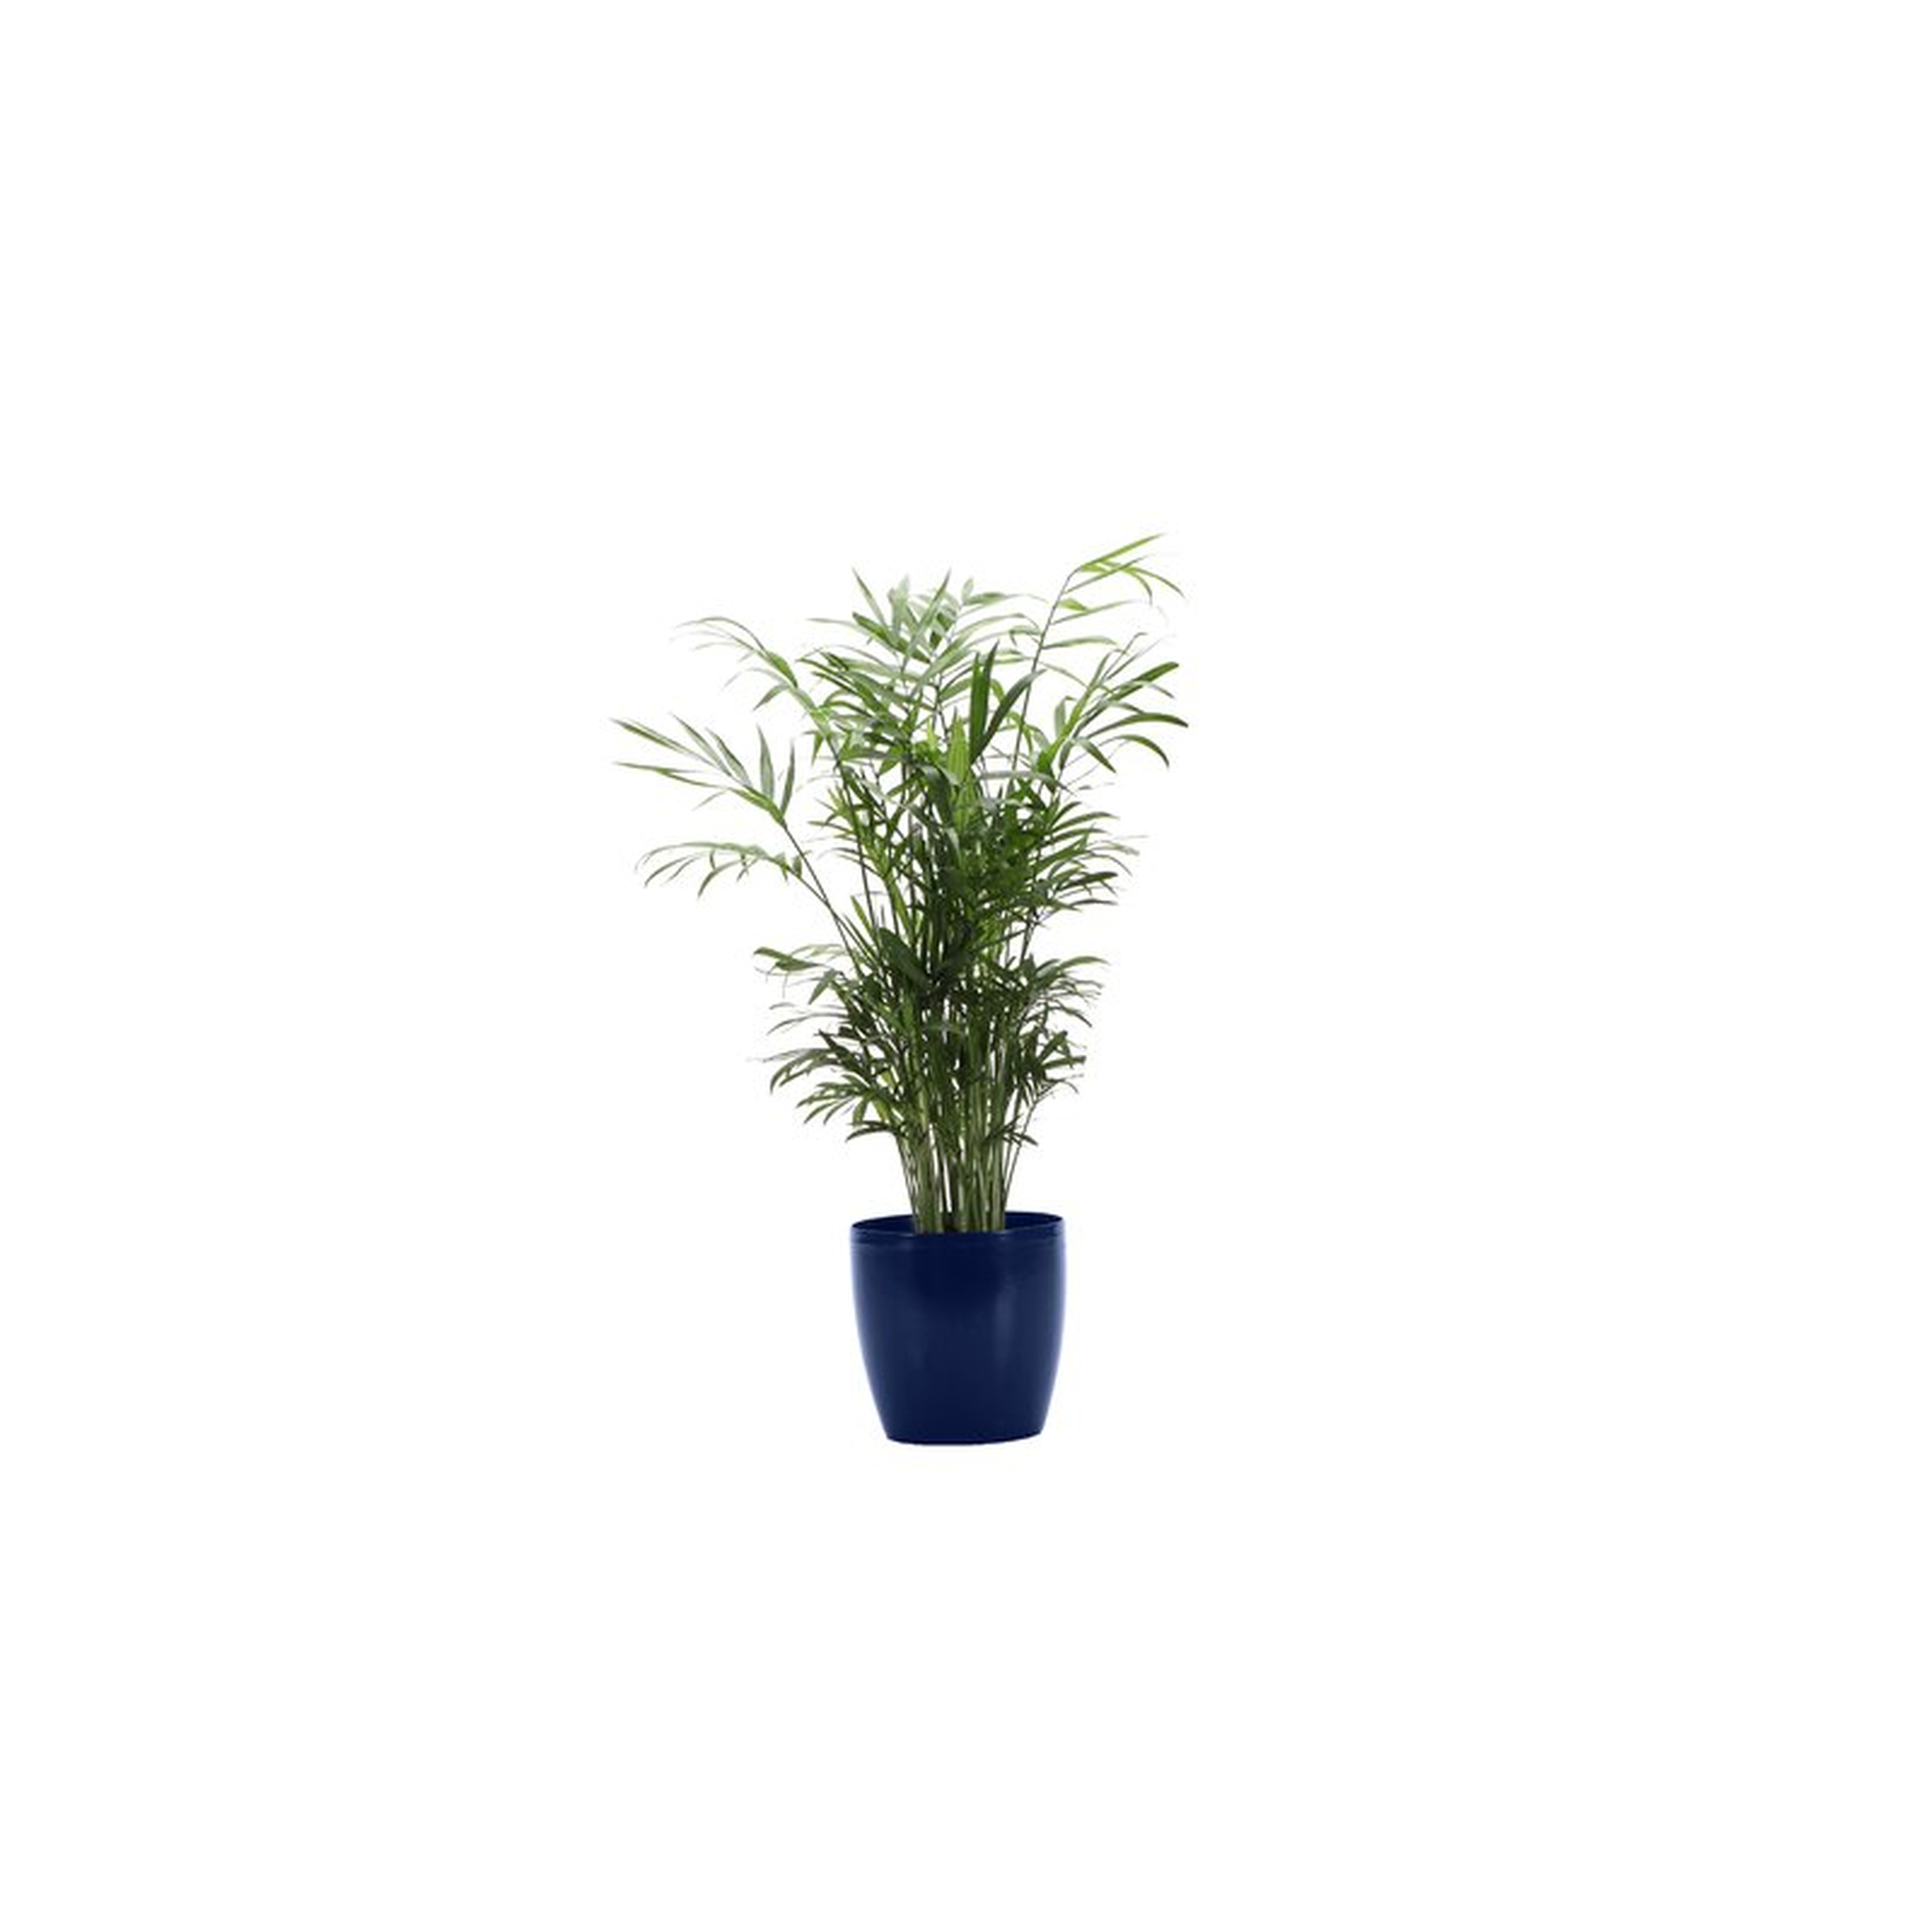 16" Thorsen's Greenhouse Live Neantha Bella Palm Plant in Pot Base Color: Iris - Perigold